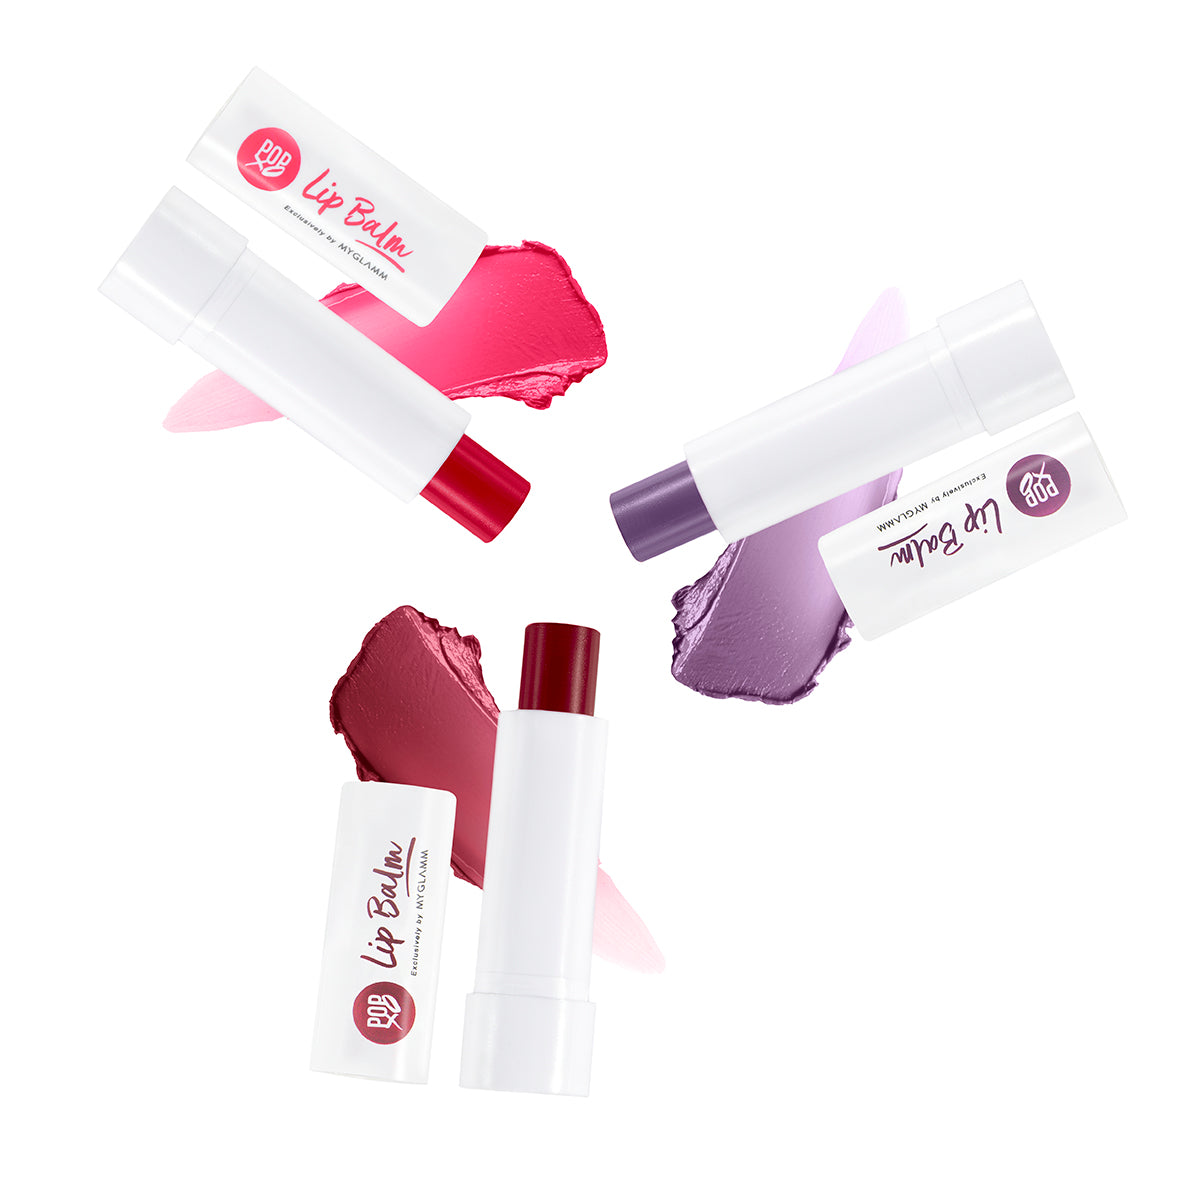 MyGlamm POPxo Makeup Pucker up lip balm Kit-Cherry Blossoms, Strawberry Kisses, Berrylicious-3gm